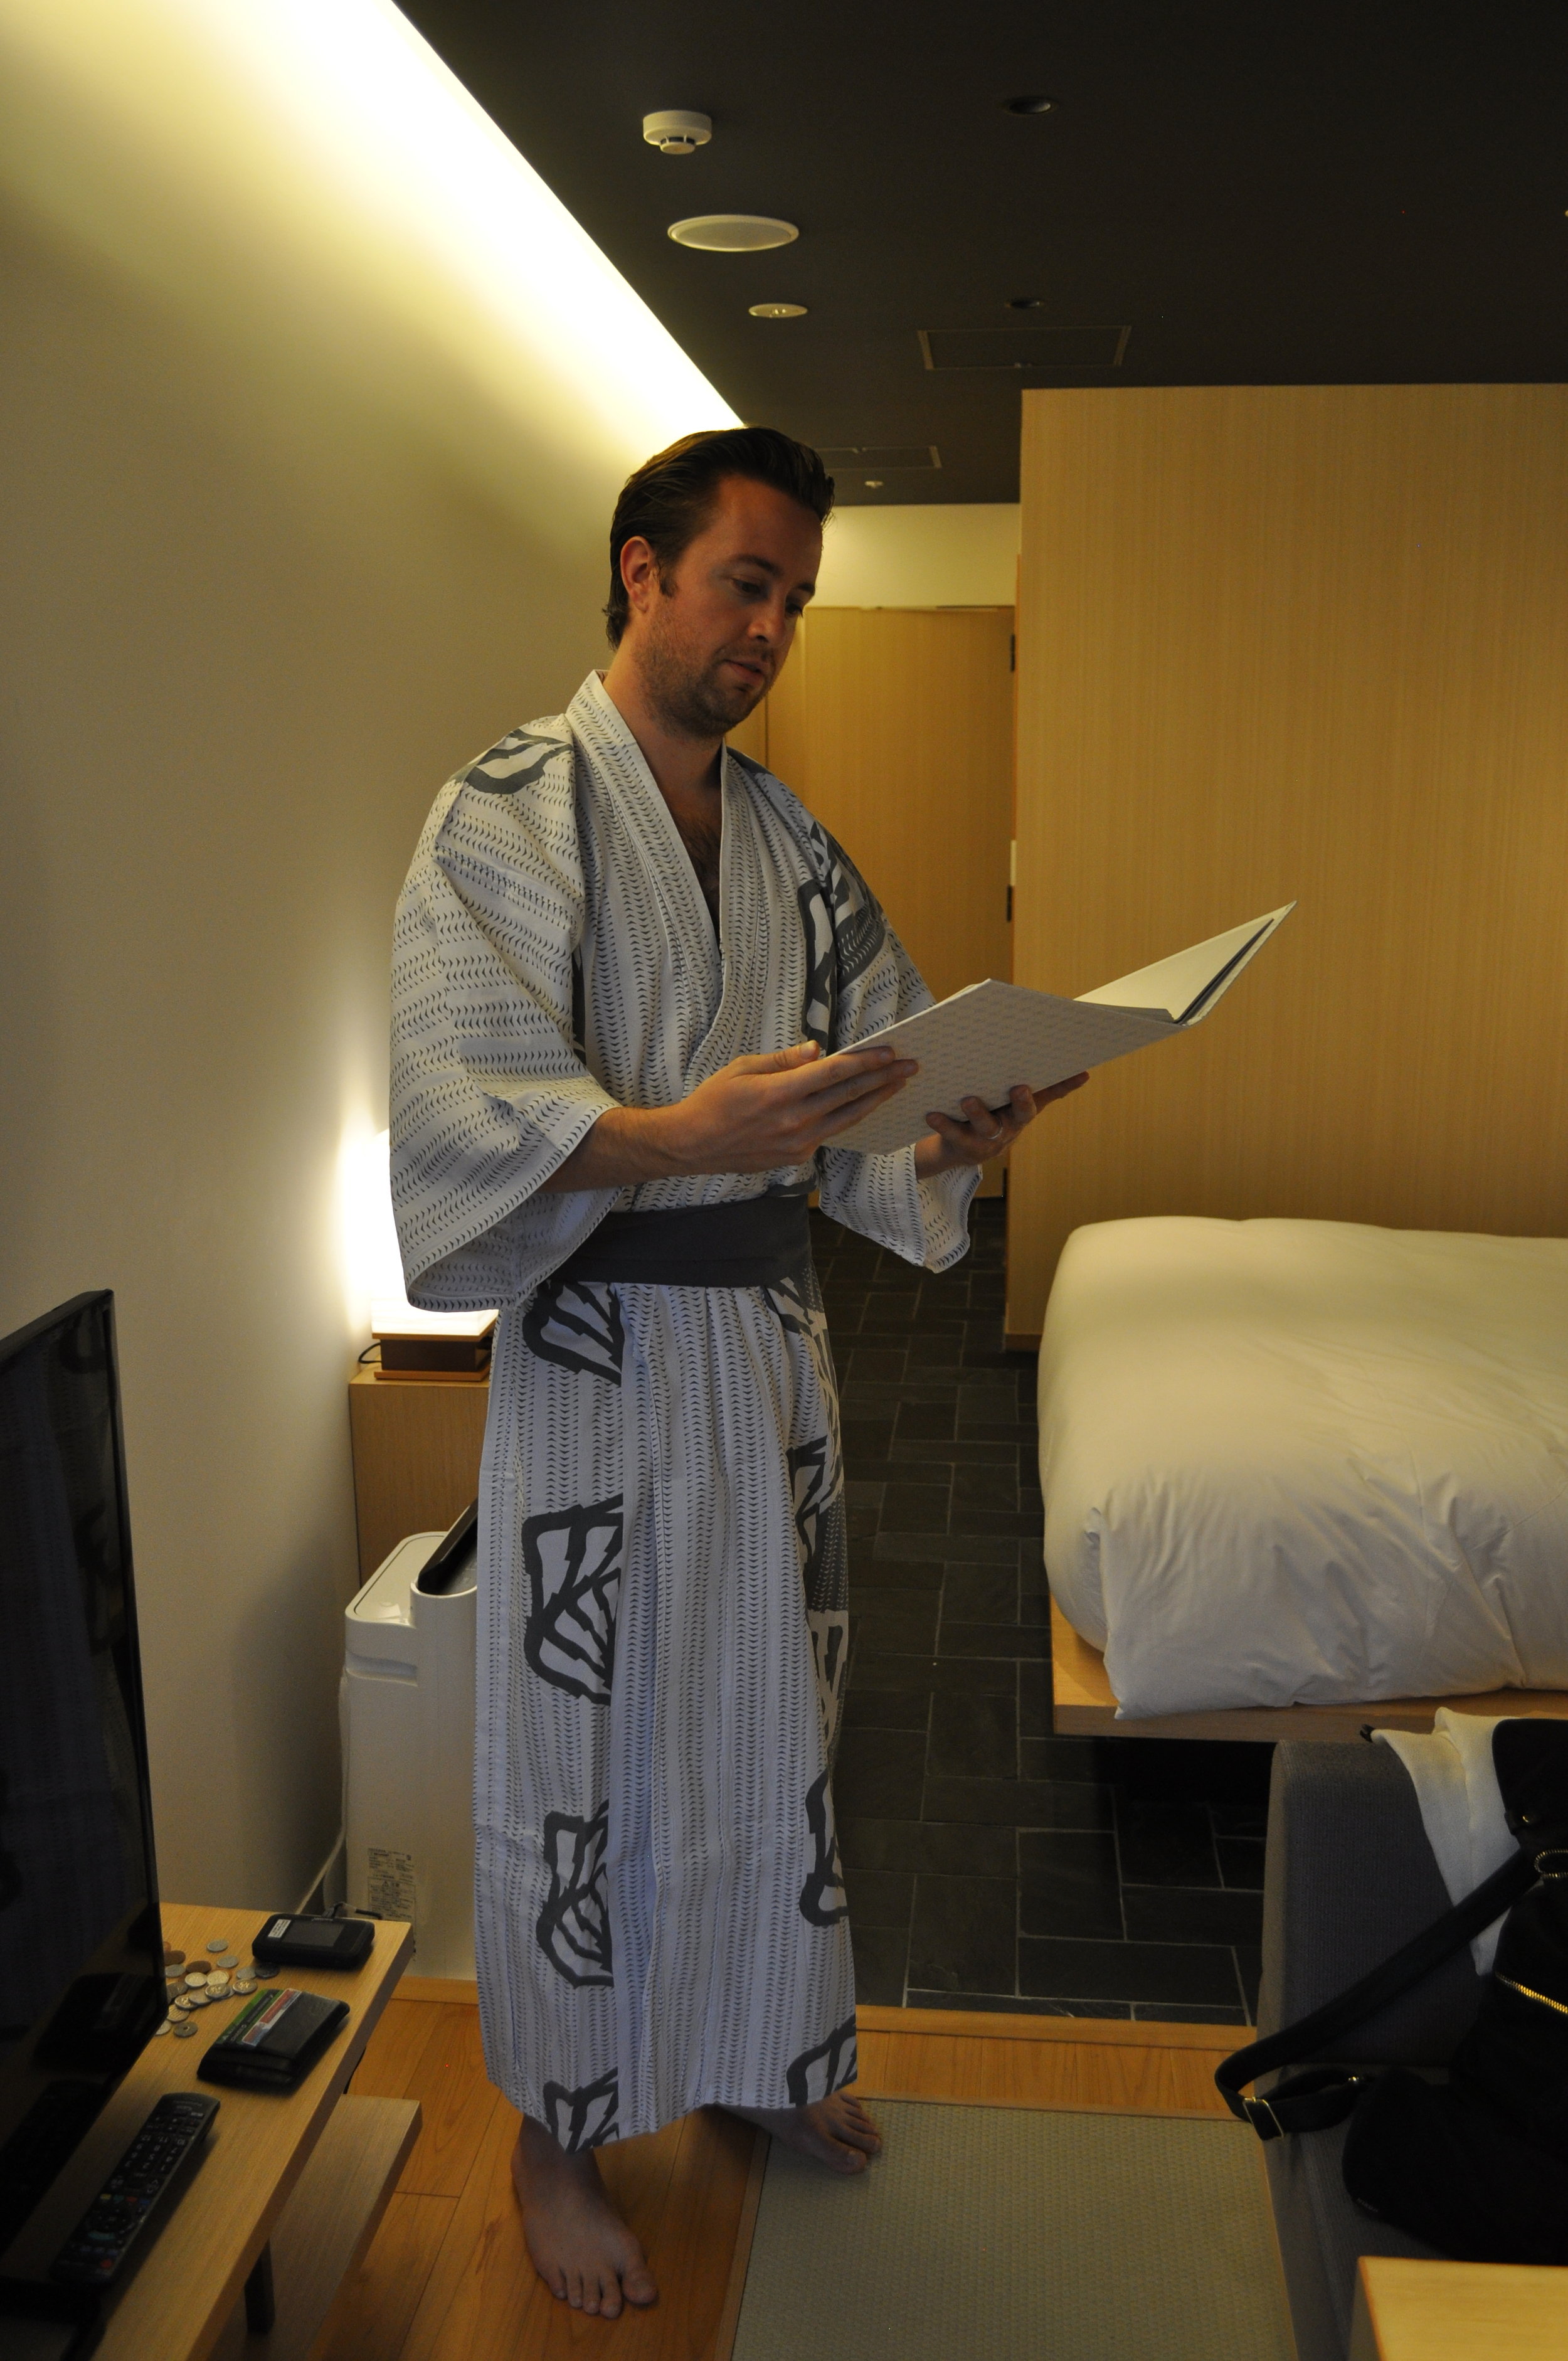 Pondering room service in a yukata